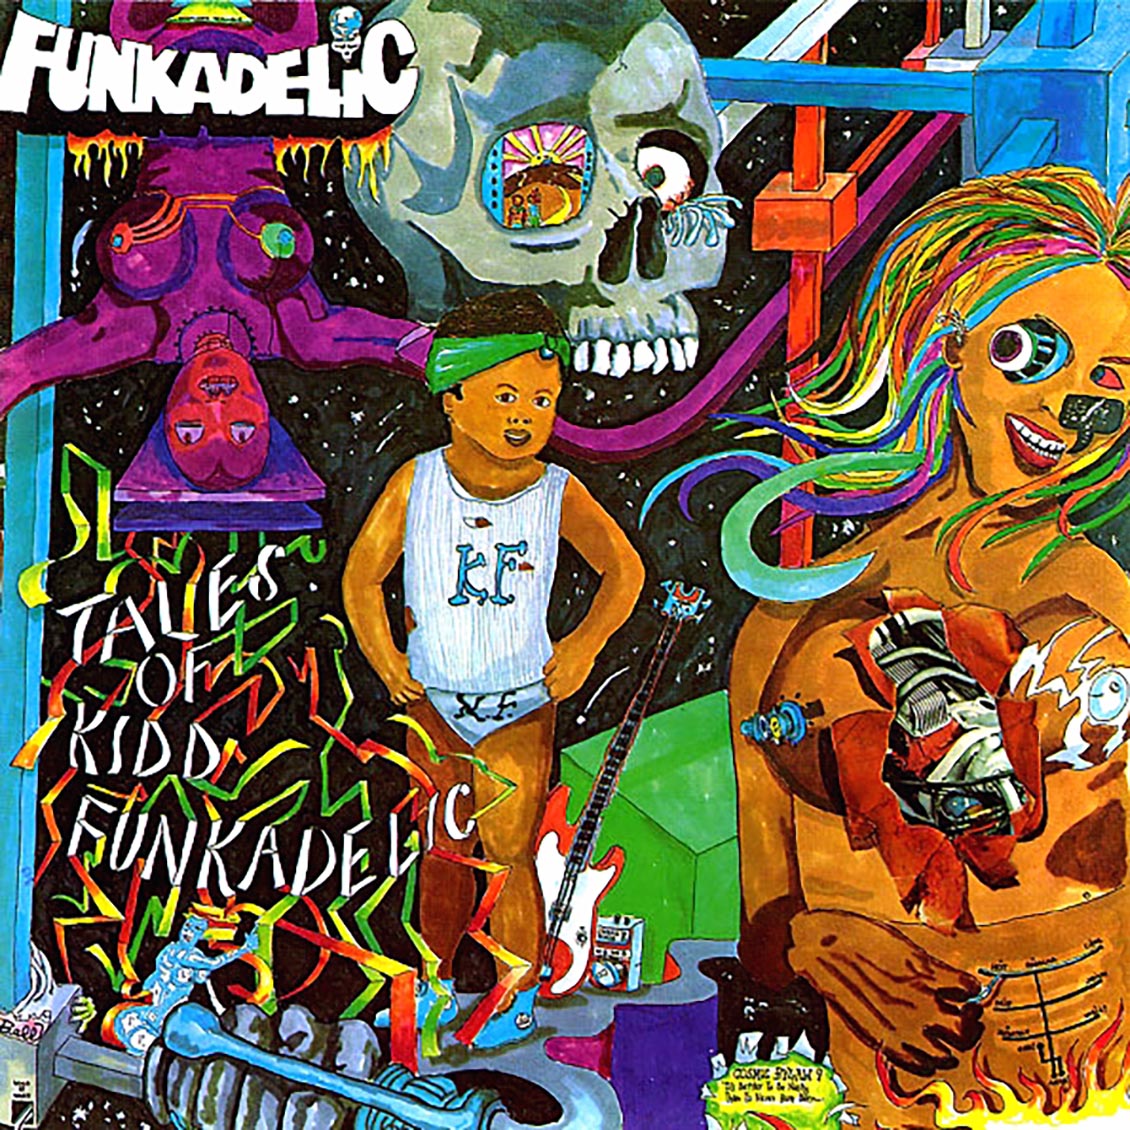 Funkadelic - Tales of Kidd Funkadelic [1992 Reissue] [New Vinyl Record LP]